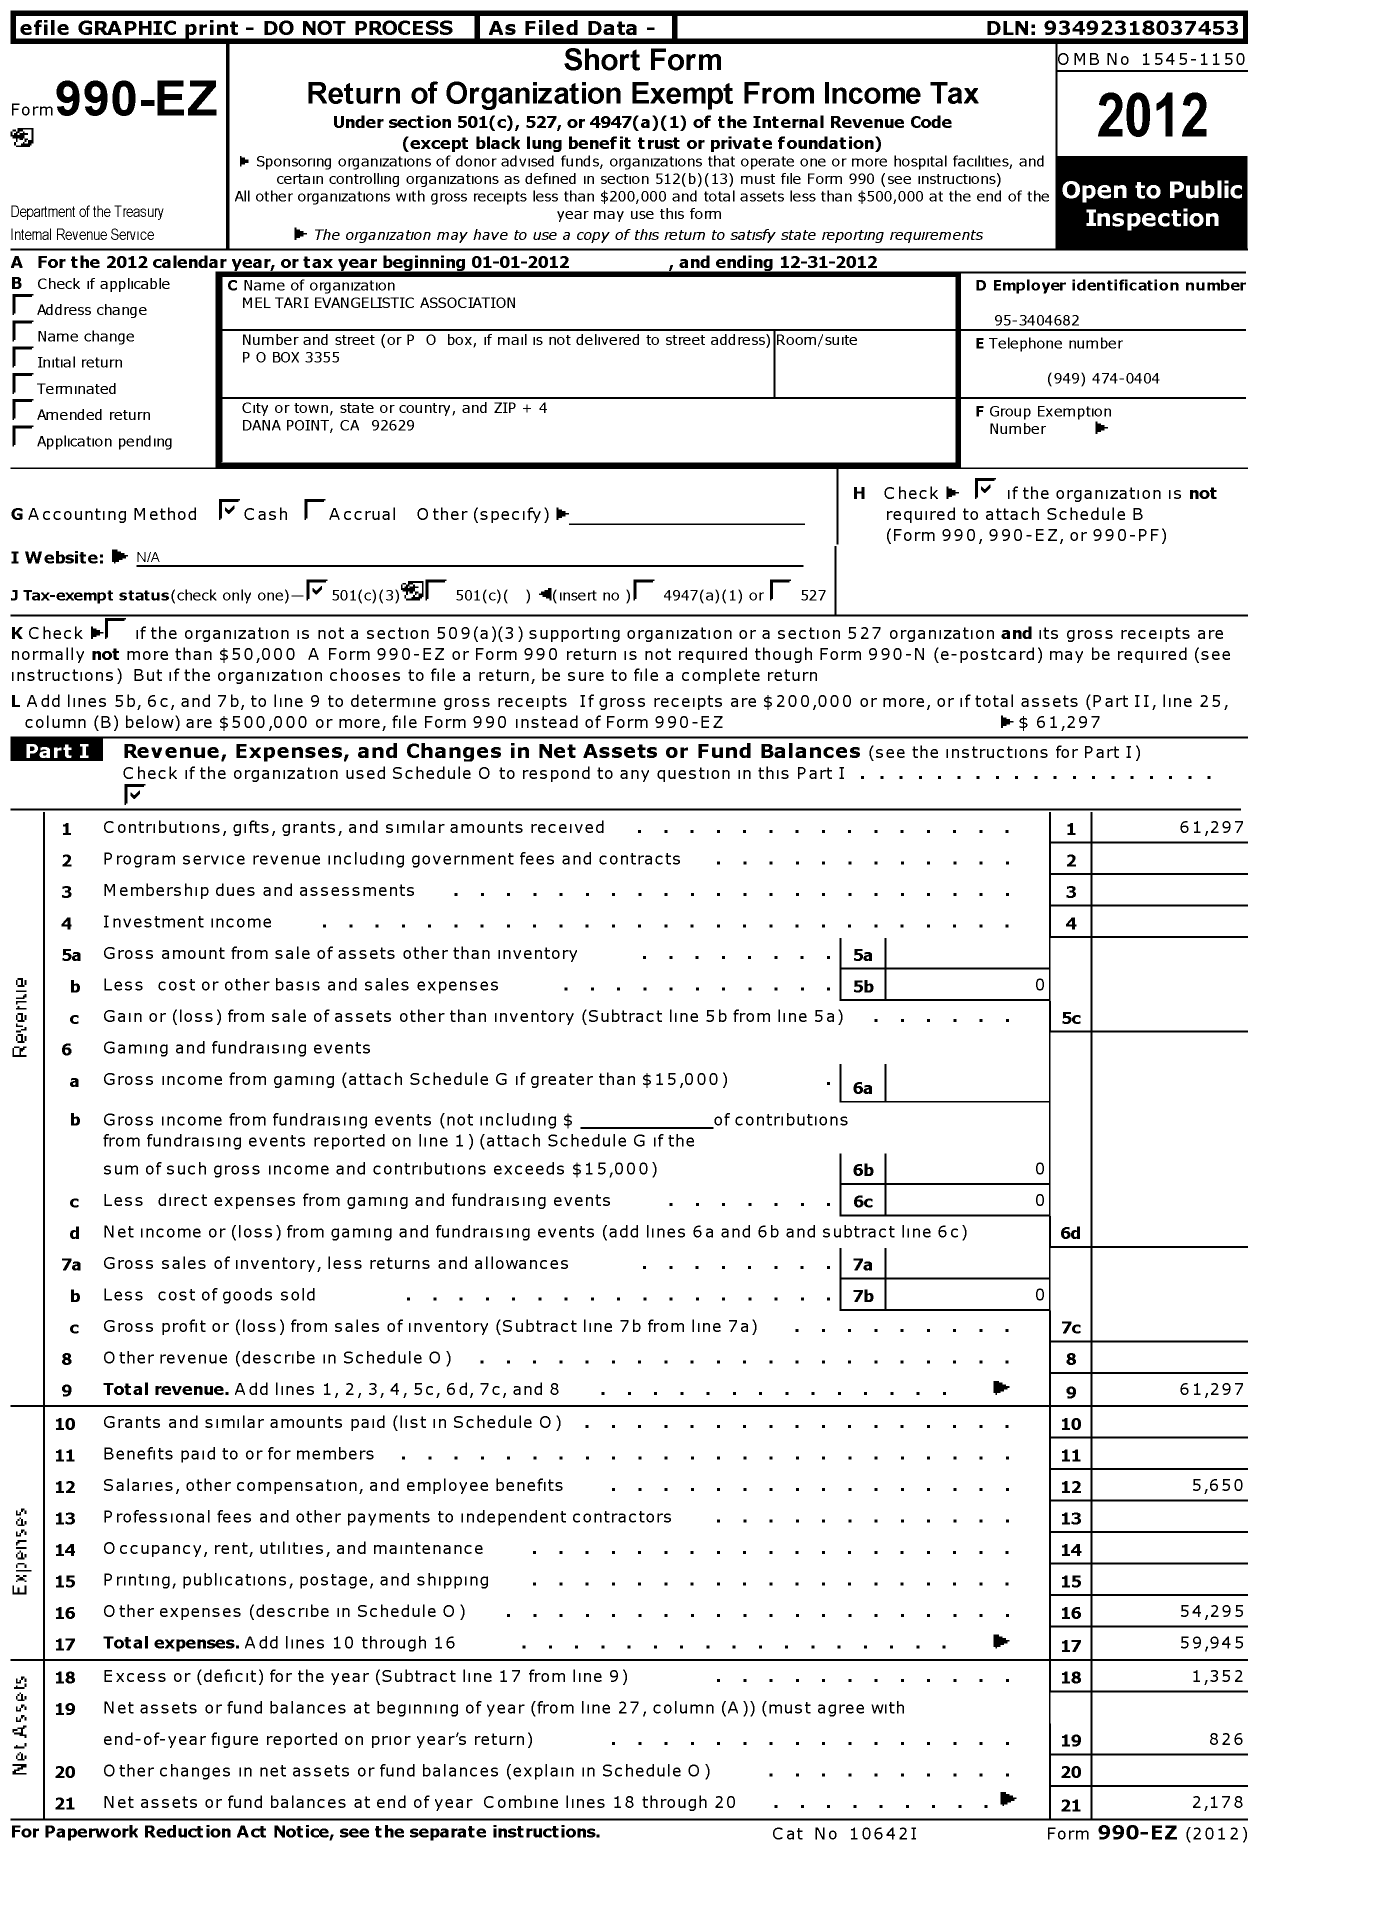 Image of first page of 2012 Form 990EZ for Mel Tari Evangelistic Association